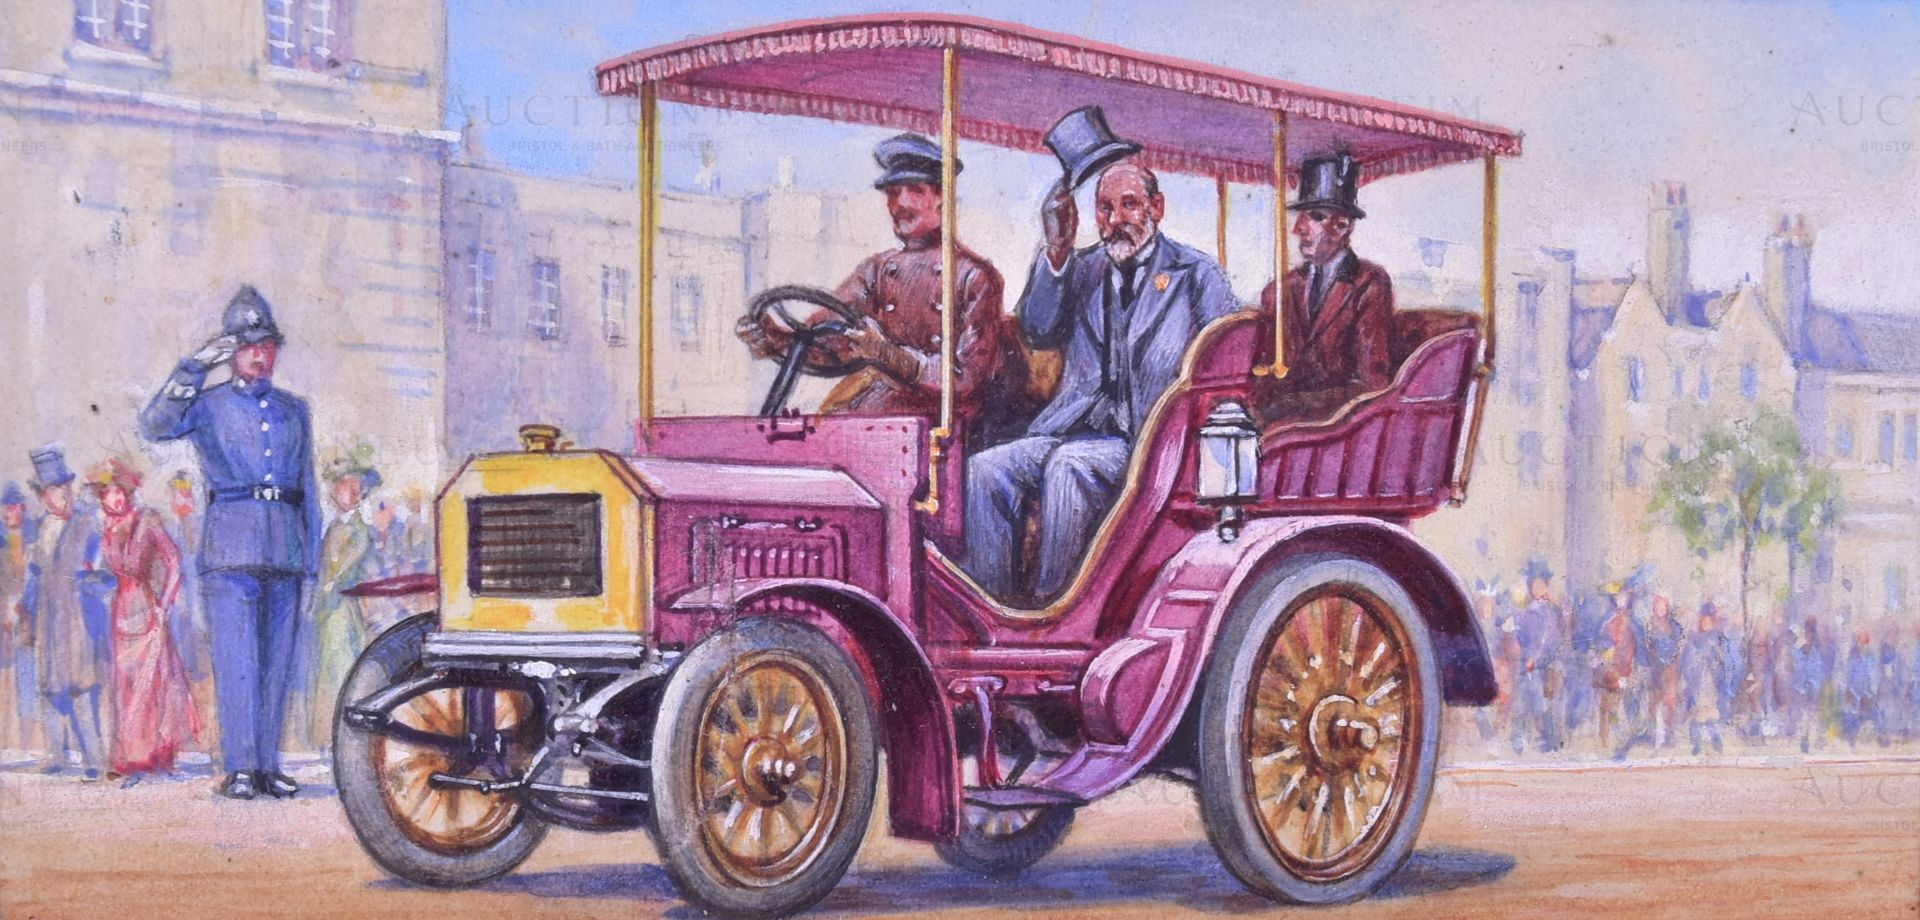 WEIGHING MACHINE CARDS - HISTORY OF TRANSPORT - ORIGINAL ARTWORK - Image 2 of 6